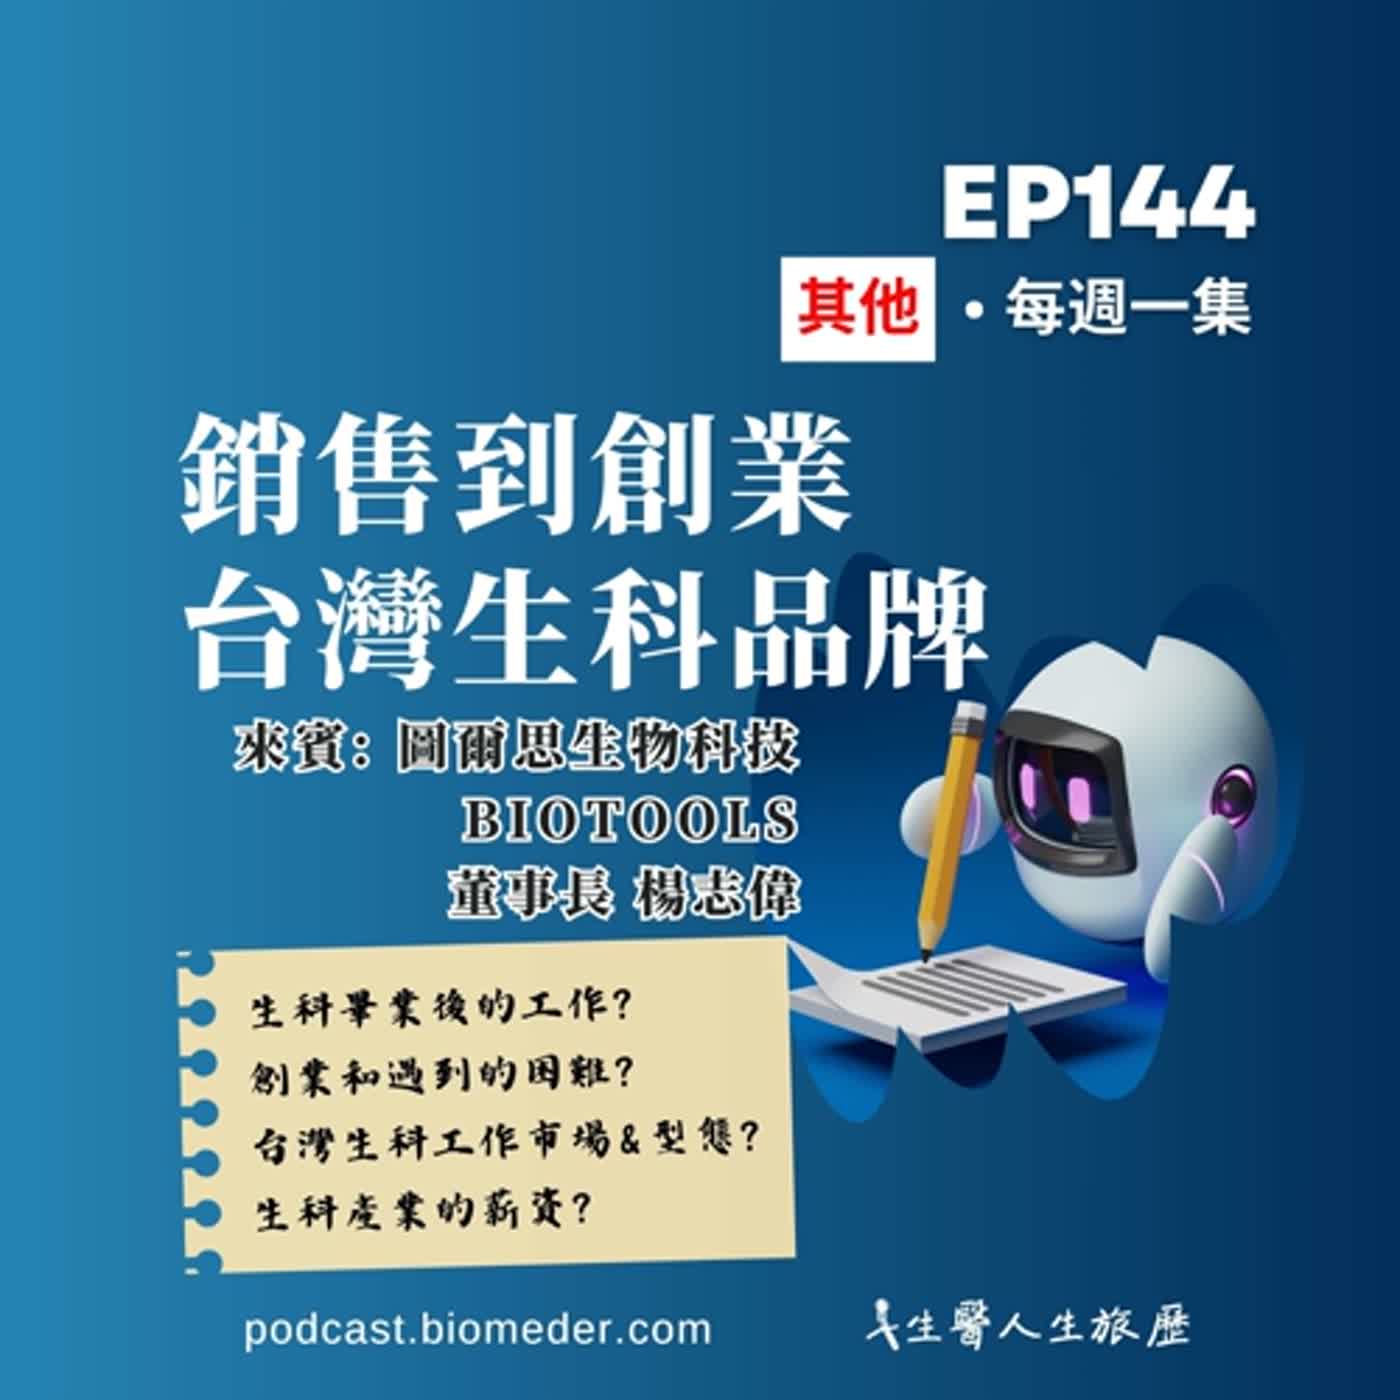 EP144-生科人從銷售到創業，建立台灣生科品牌，薪水和機會自己開創